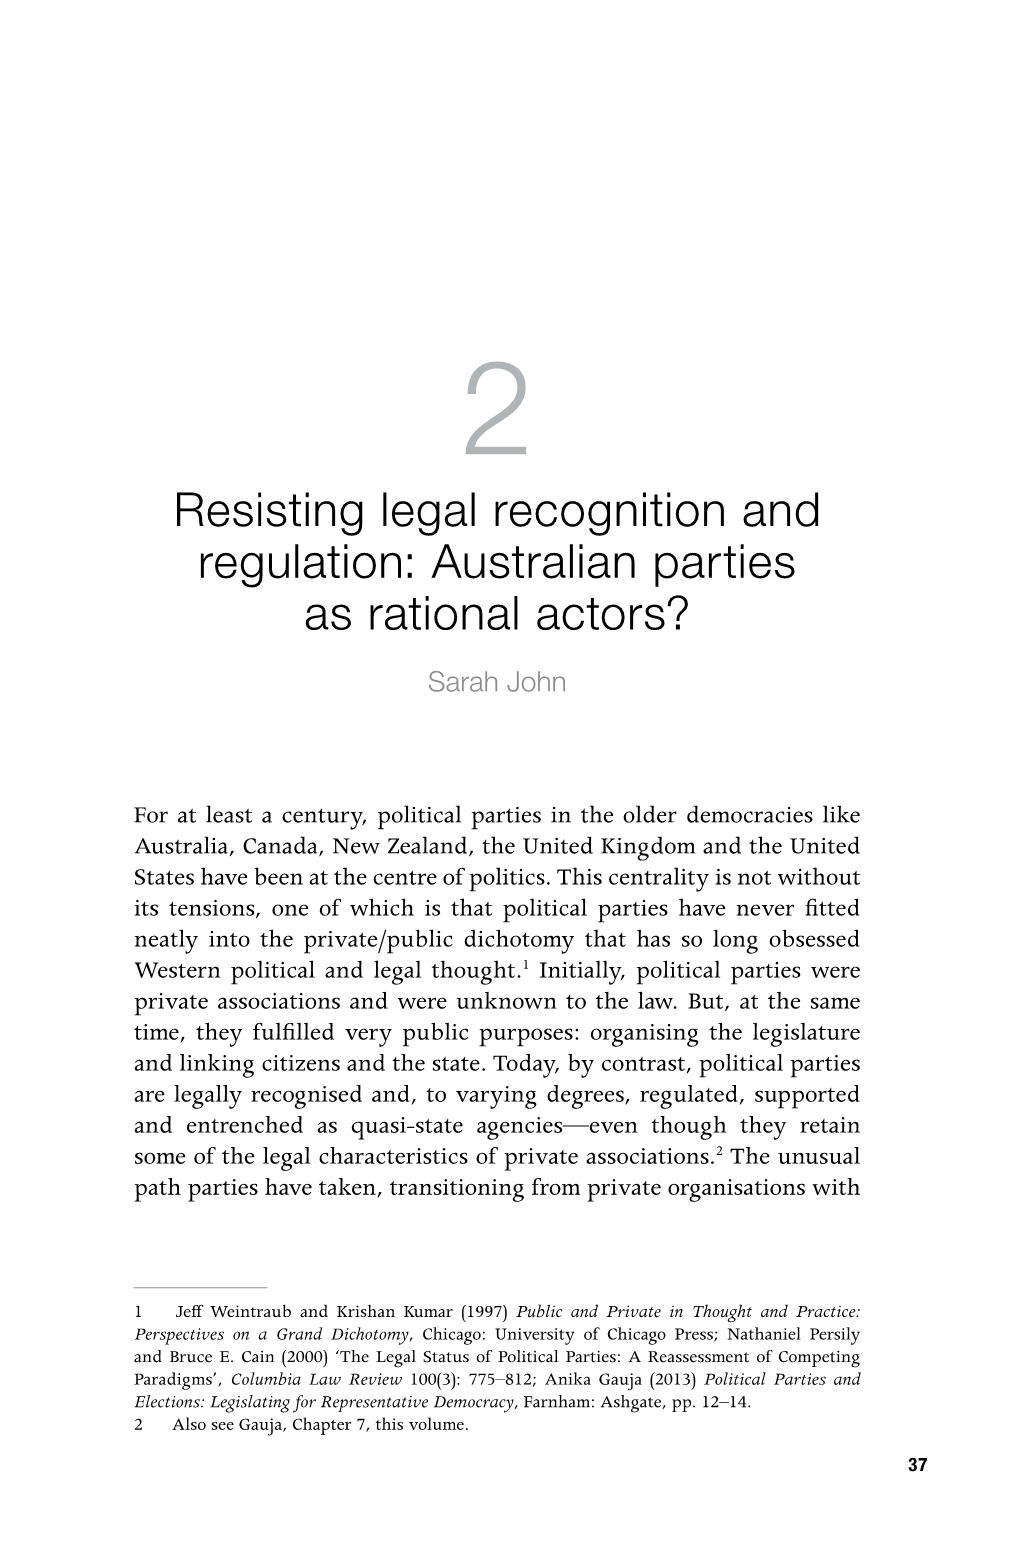 Resisting Legal Recognition and Regulation: Australian Parties As Rational Actors? Sarah John